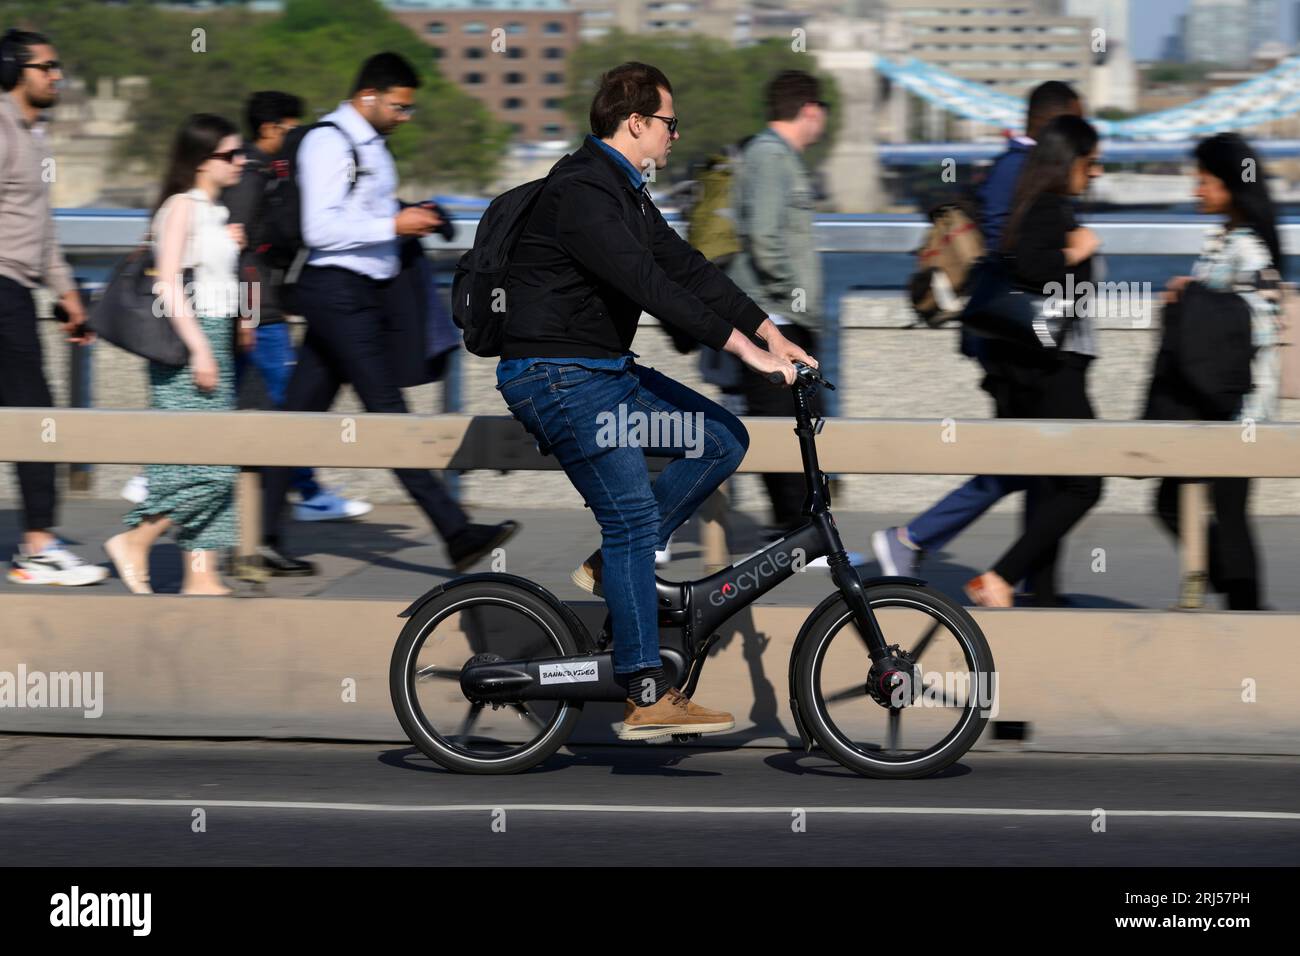 Fahrrad kit -Fotos und -Bildmaterial in hoher Auflösung – Alamy